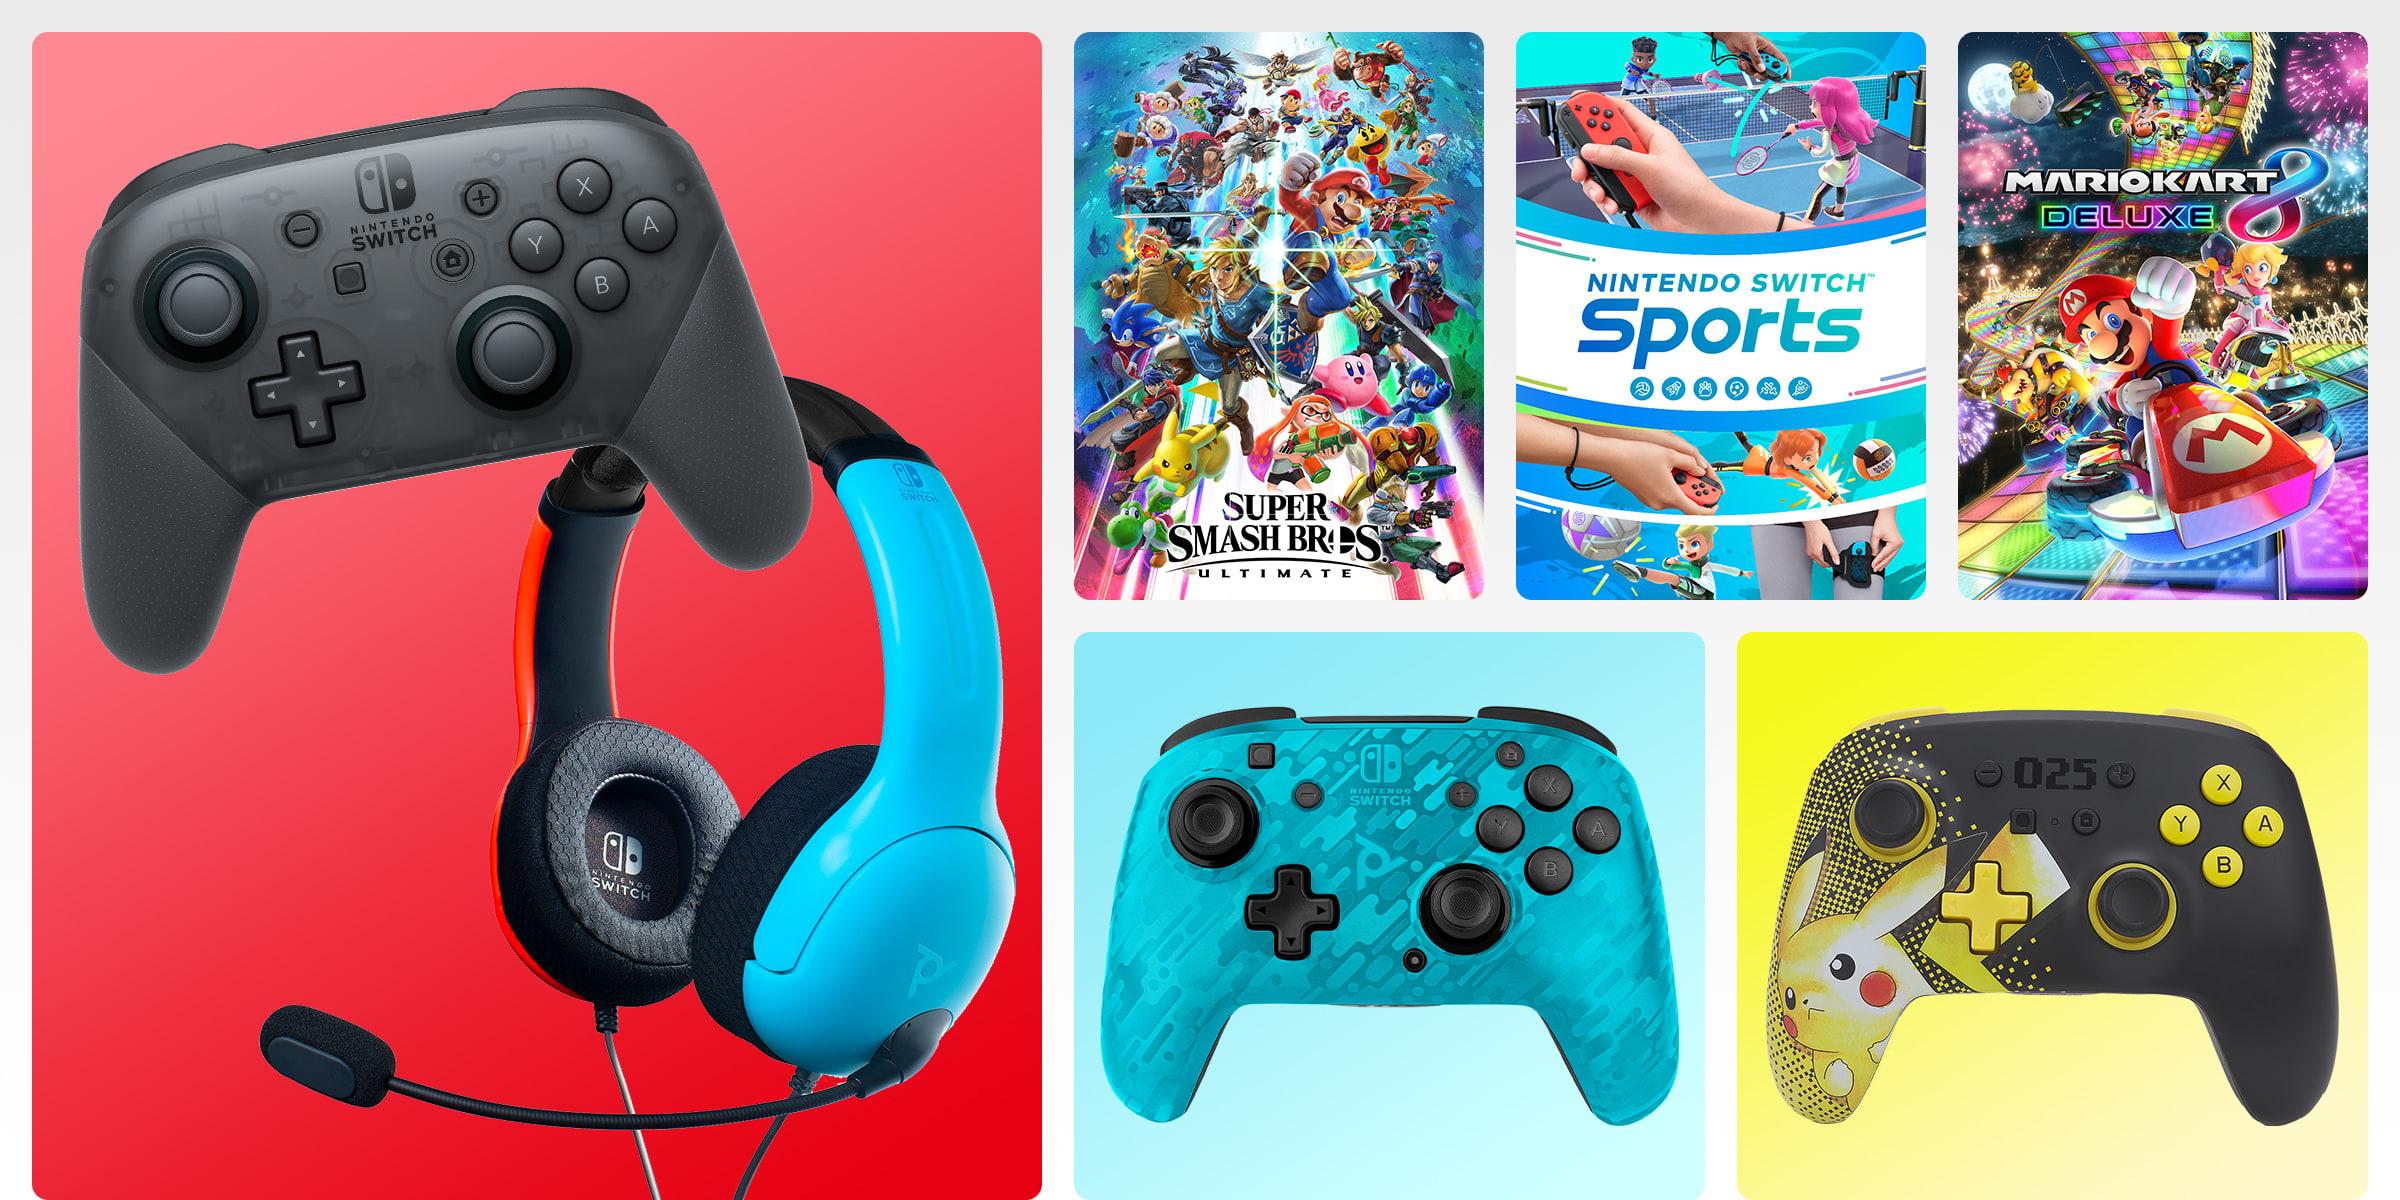 Competitive Fun, Nintendo Pro Controller, headset, Super Smash Bros. Ultimate, Nintendo Switch Sports, Mario Kart 8 Deluxe